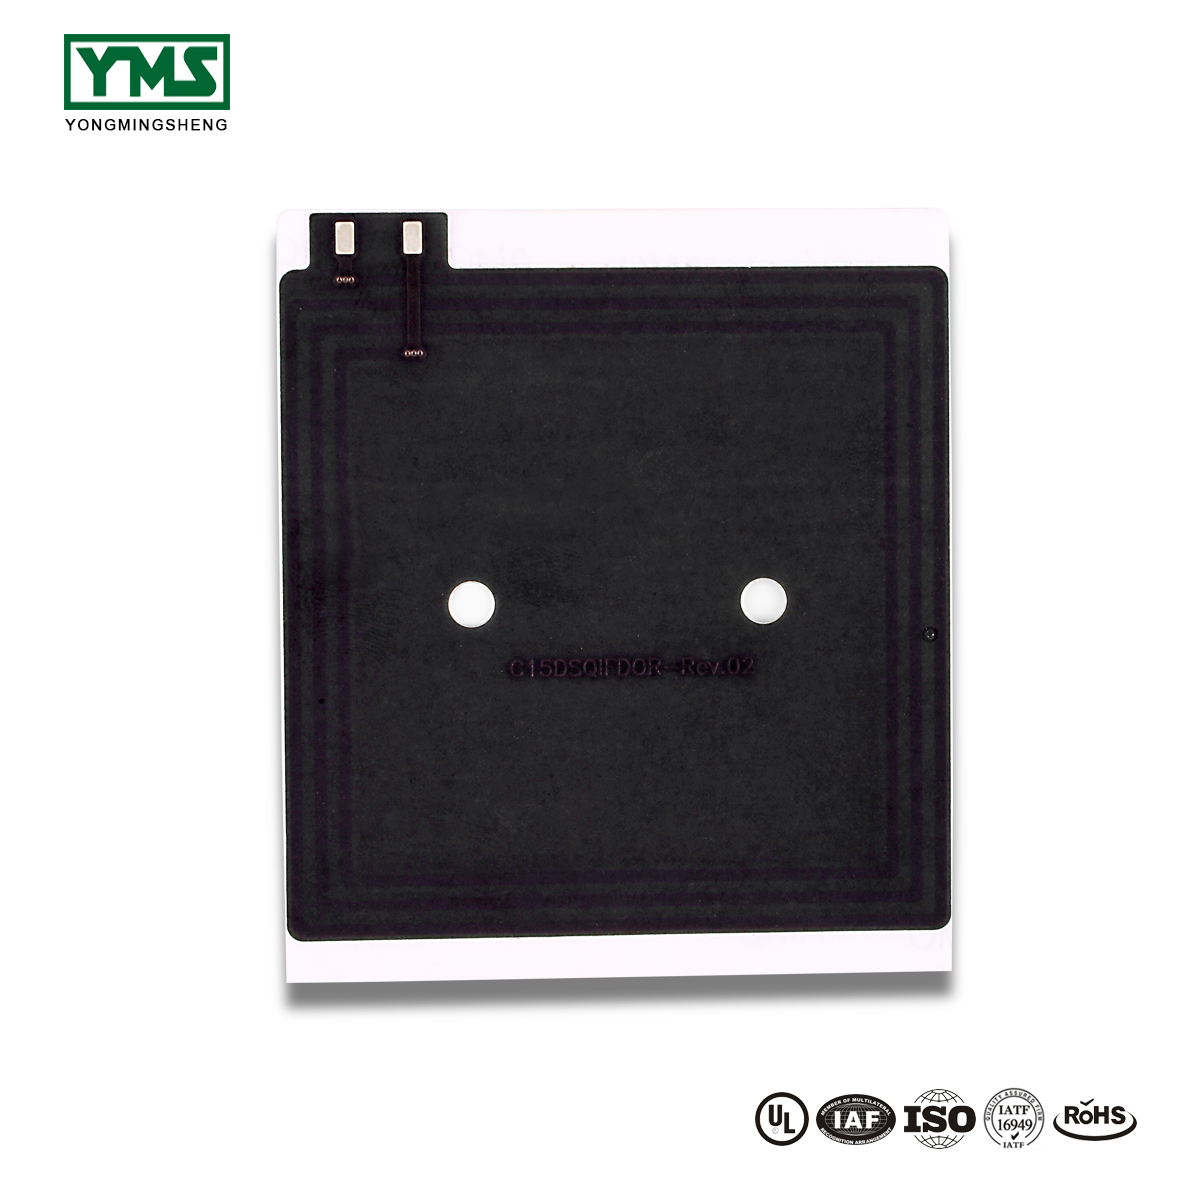 Factory wholesale Resin Plug Hole Hdi Pcb - 1Layer Black solder mask Flexible Board | YMSPCB – Yongmingsheng